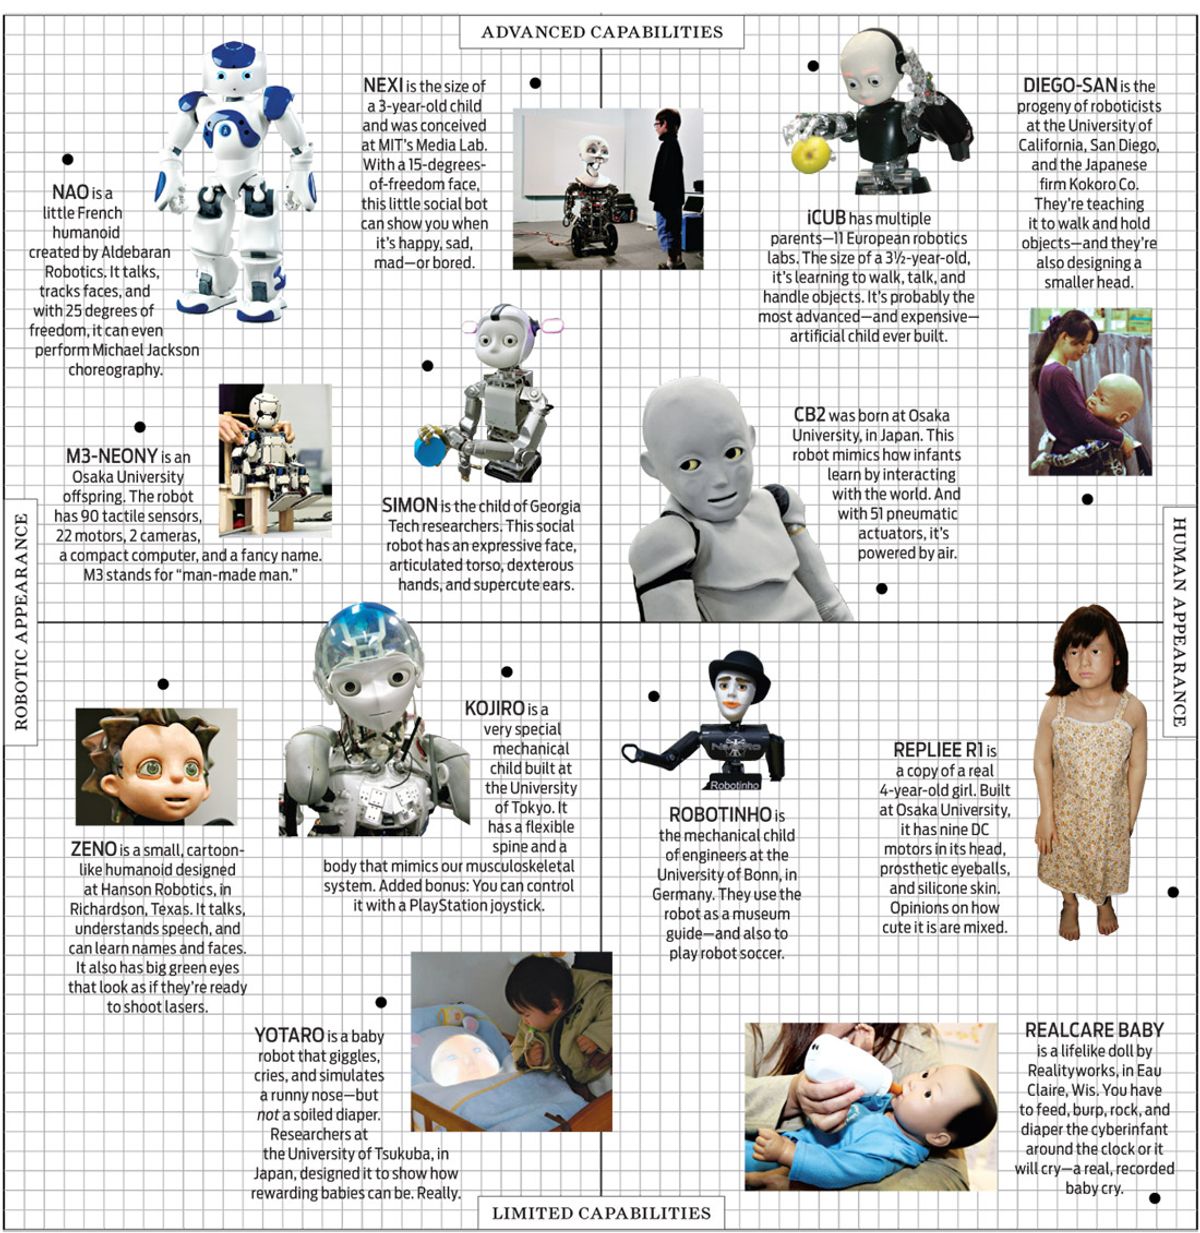 The Robot Baby Reality Matrix